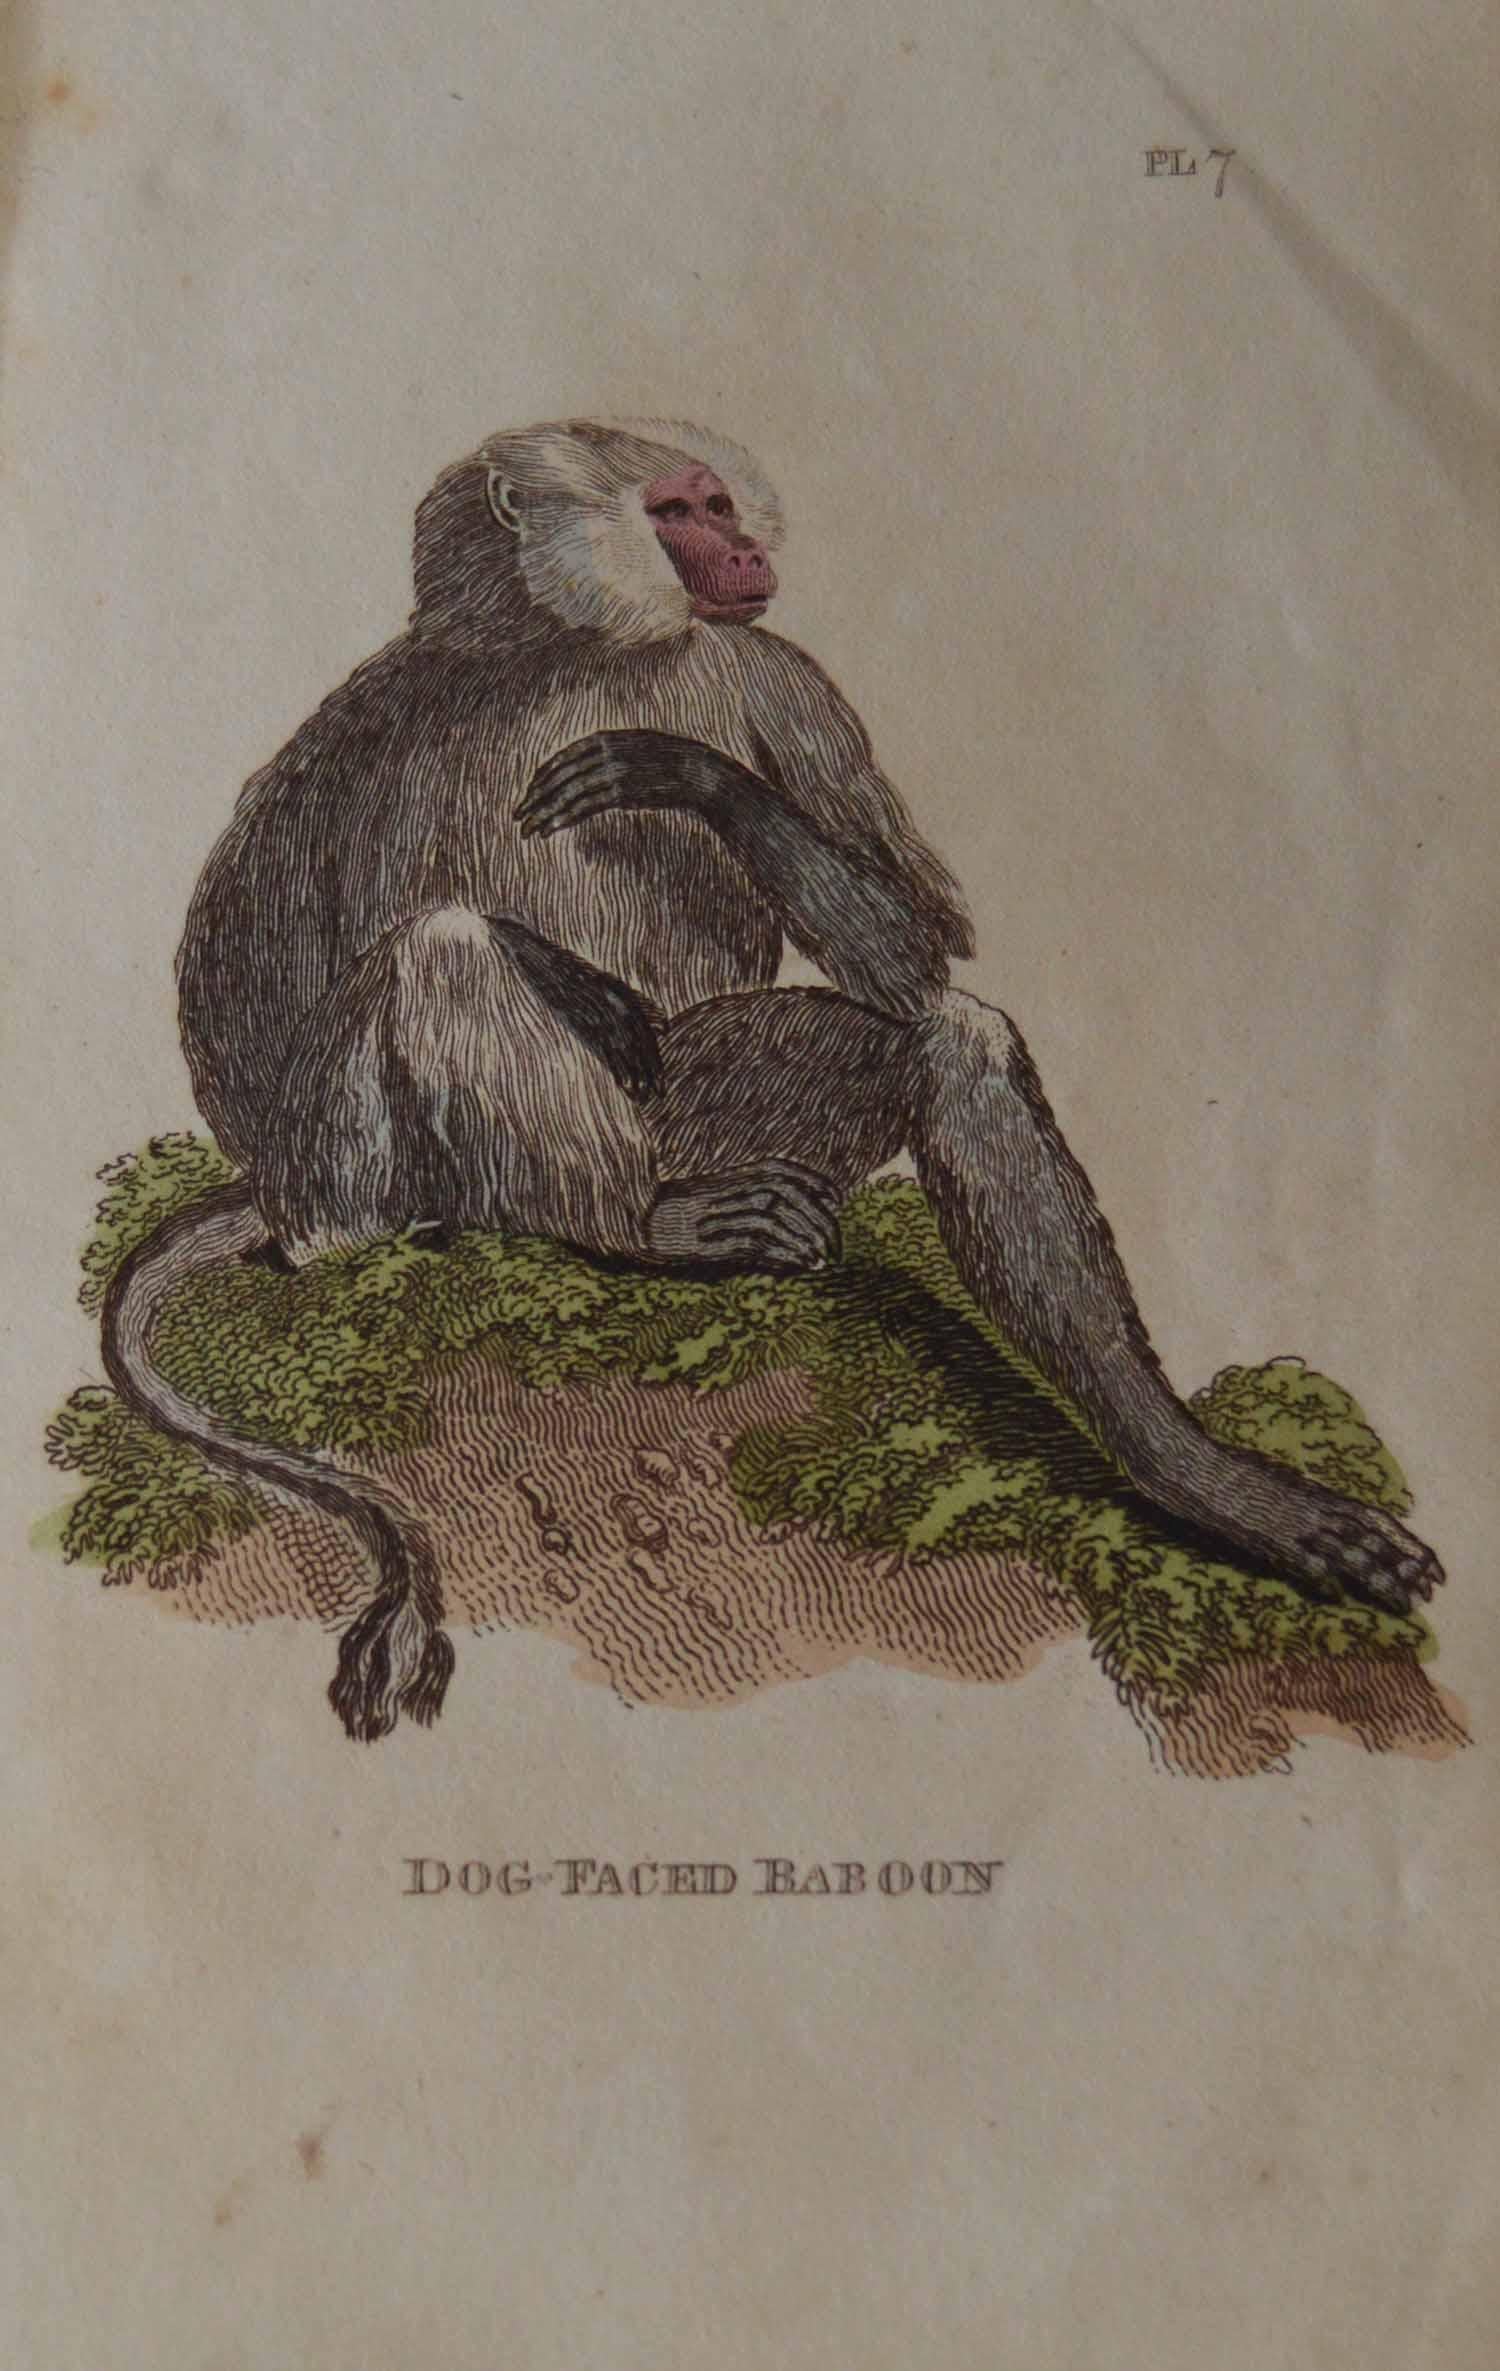 English Set of 15 Original Antique Prints of Monkey's, circa 1810